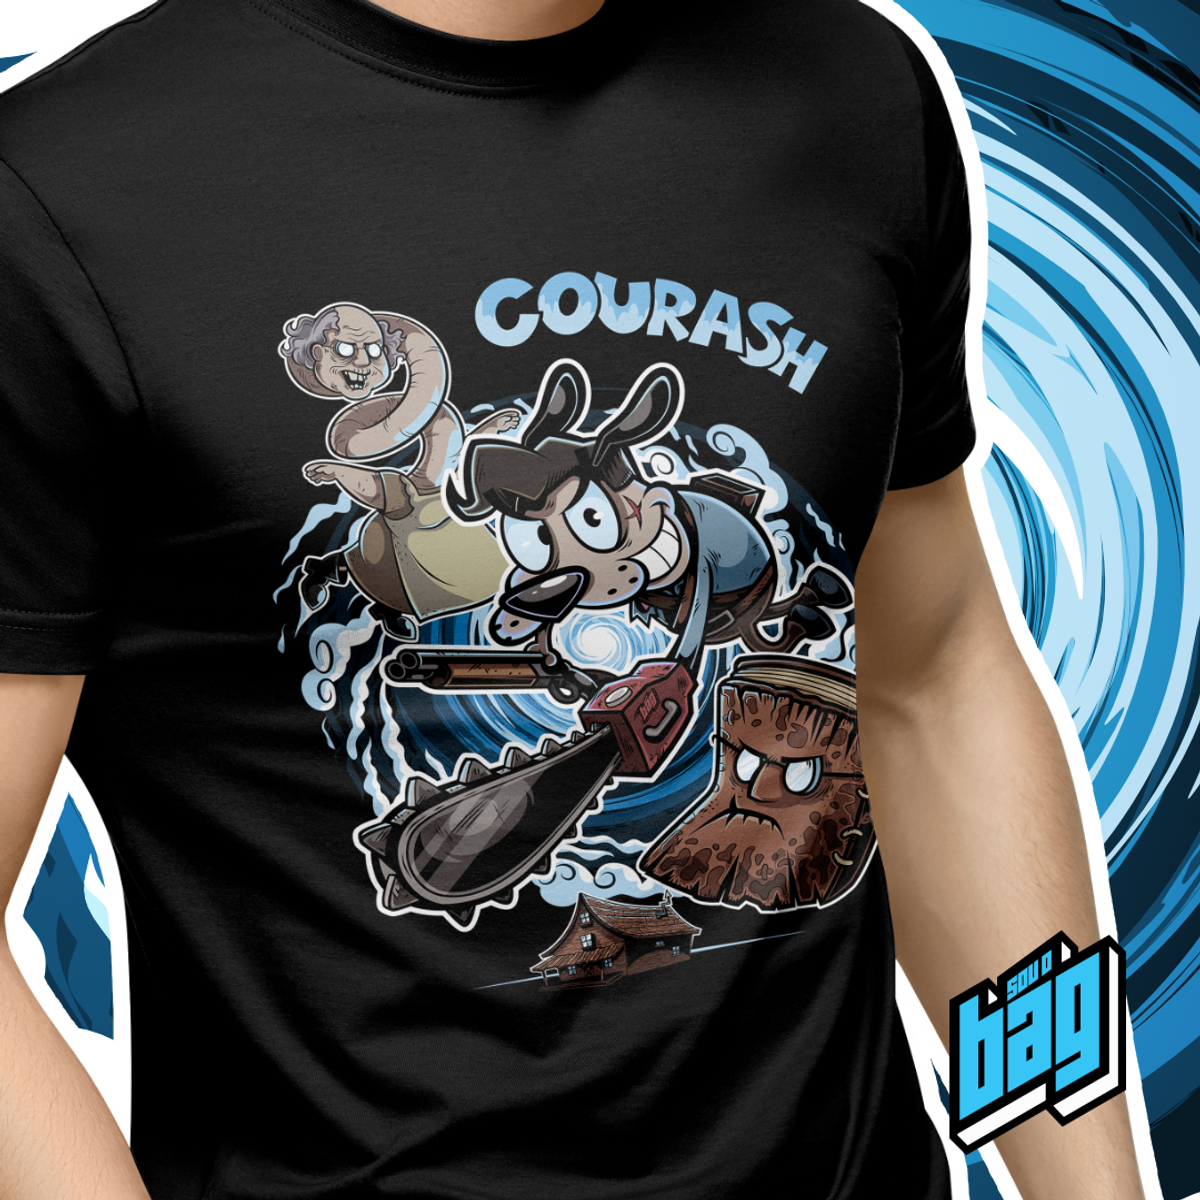 Nome do produto: Camiseta Courash